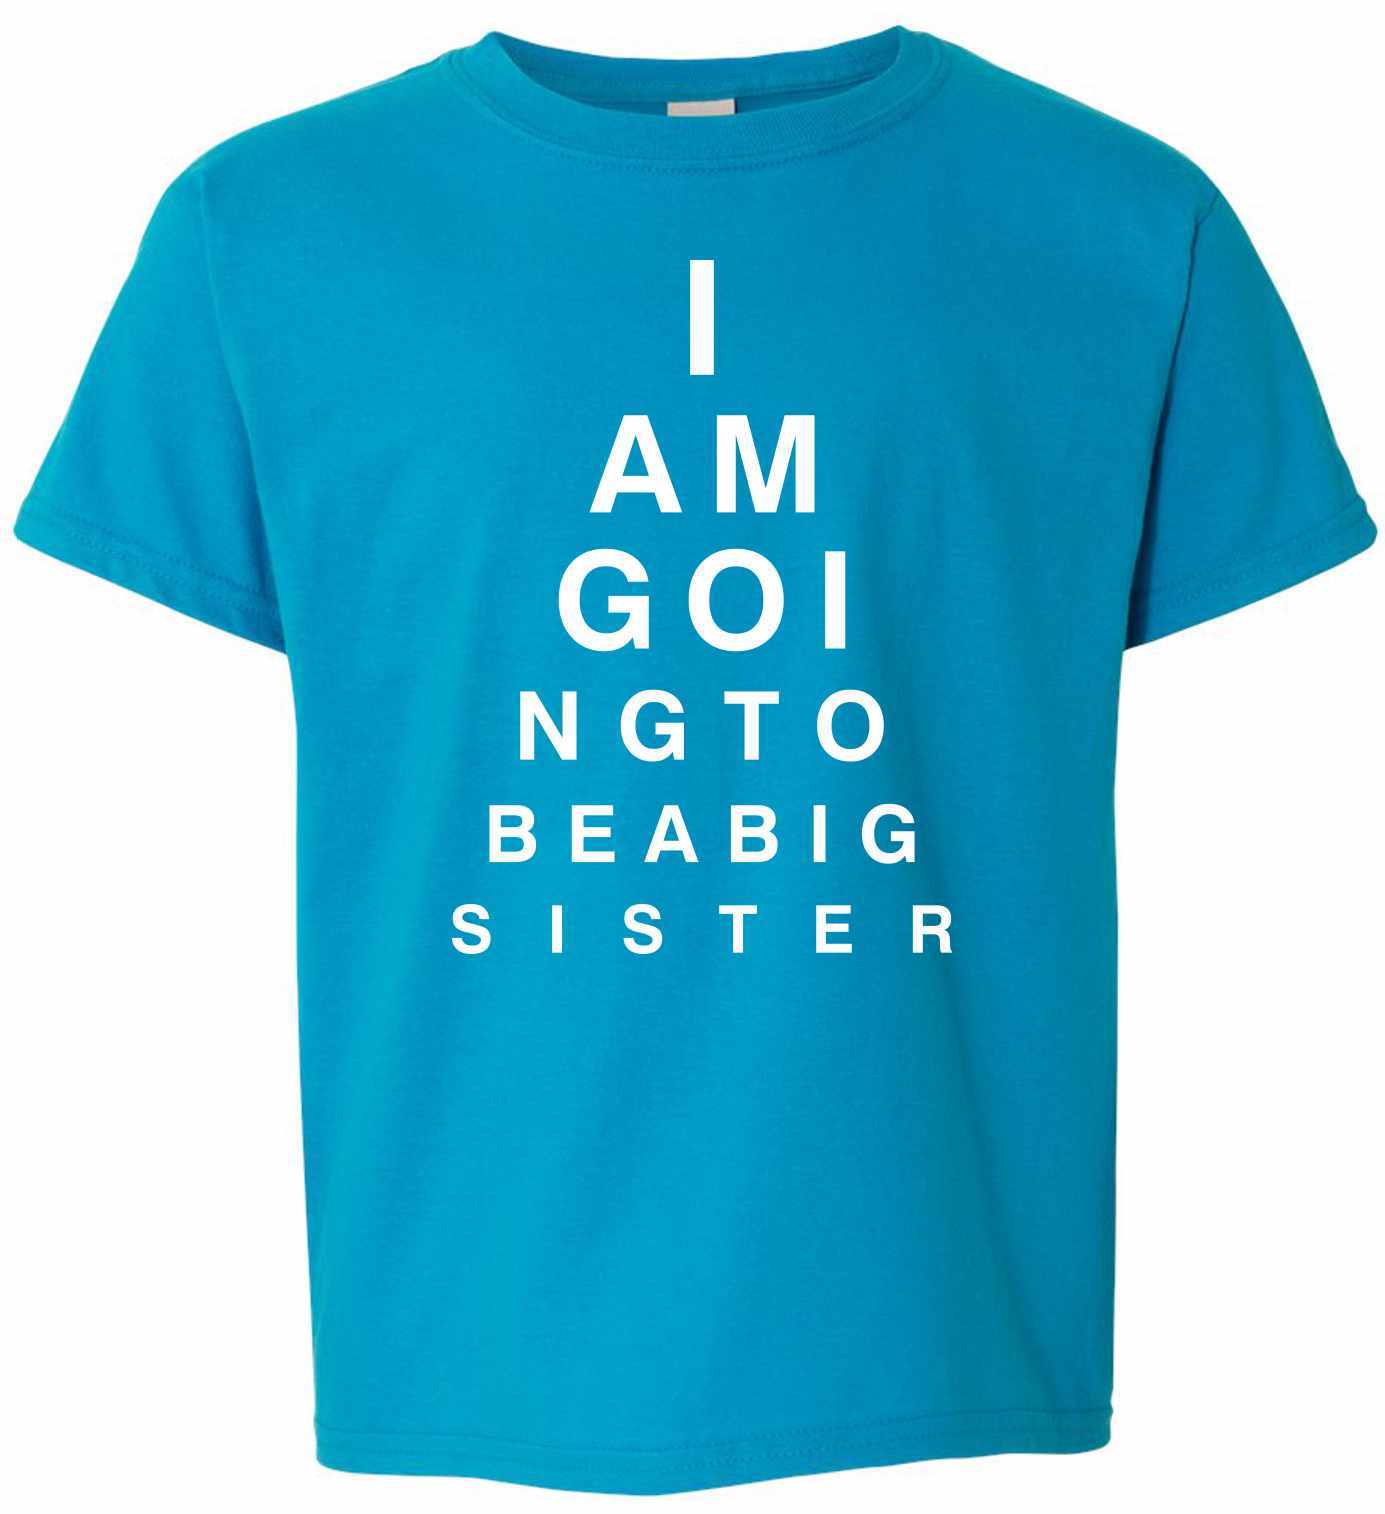 I AM GOING TO BE BIG SISTER EYE CHART on Kids T-Shirt (#1099-201)